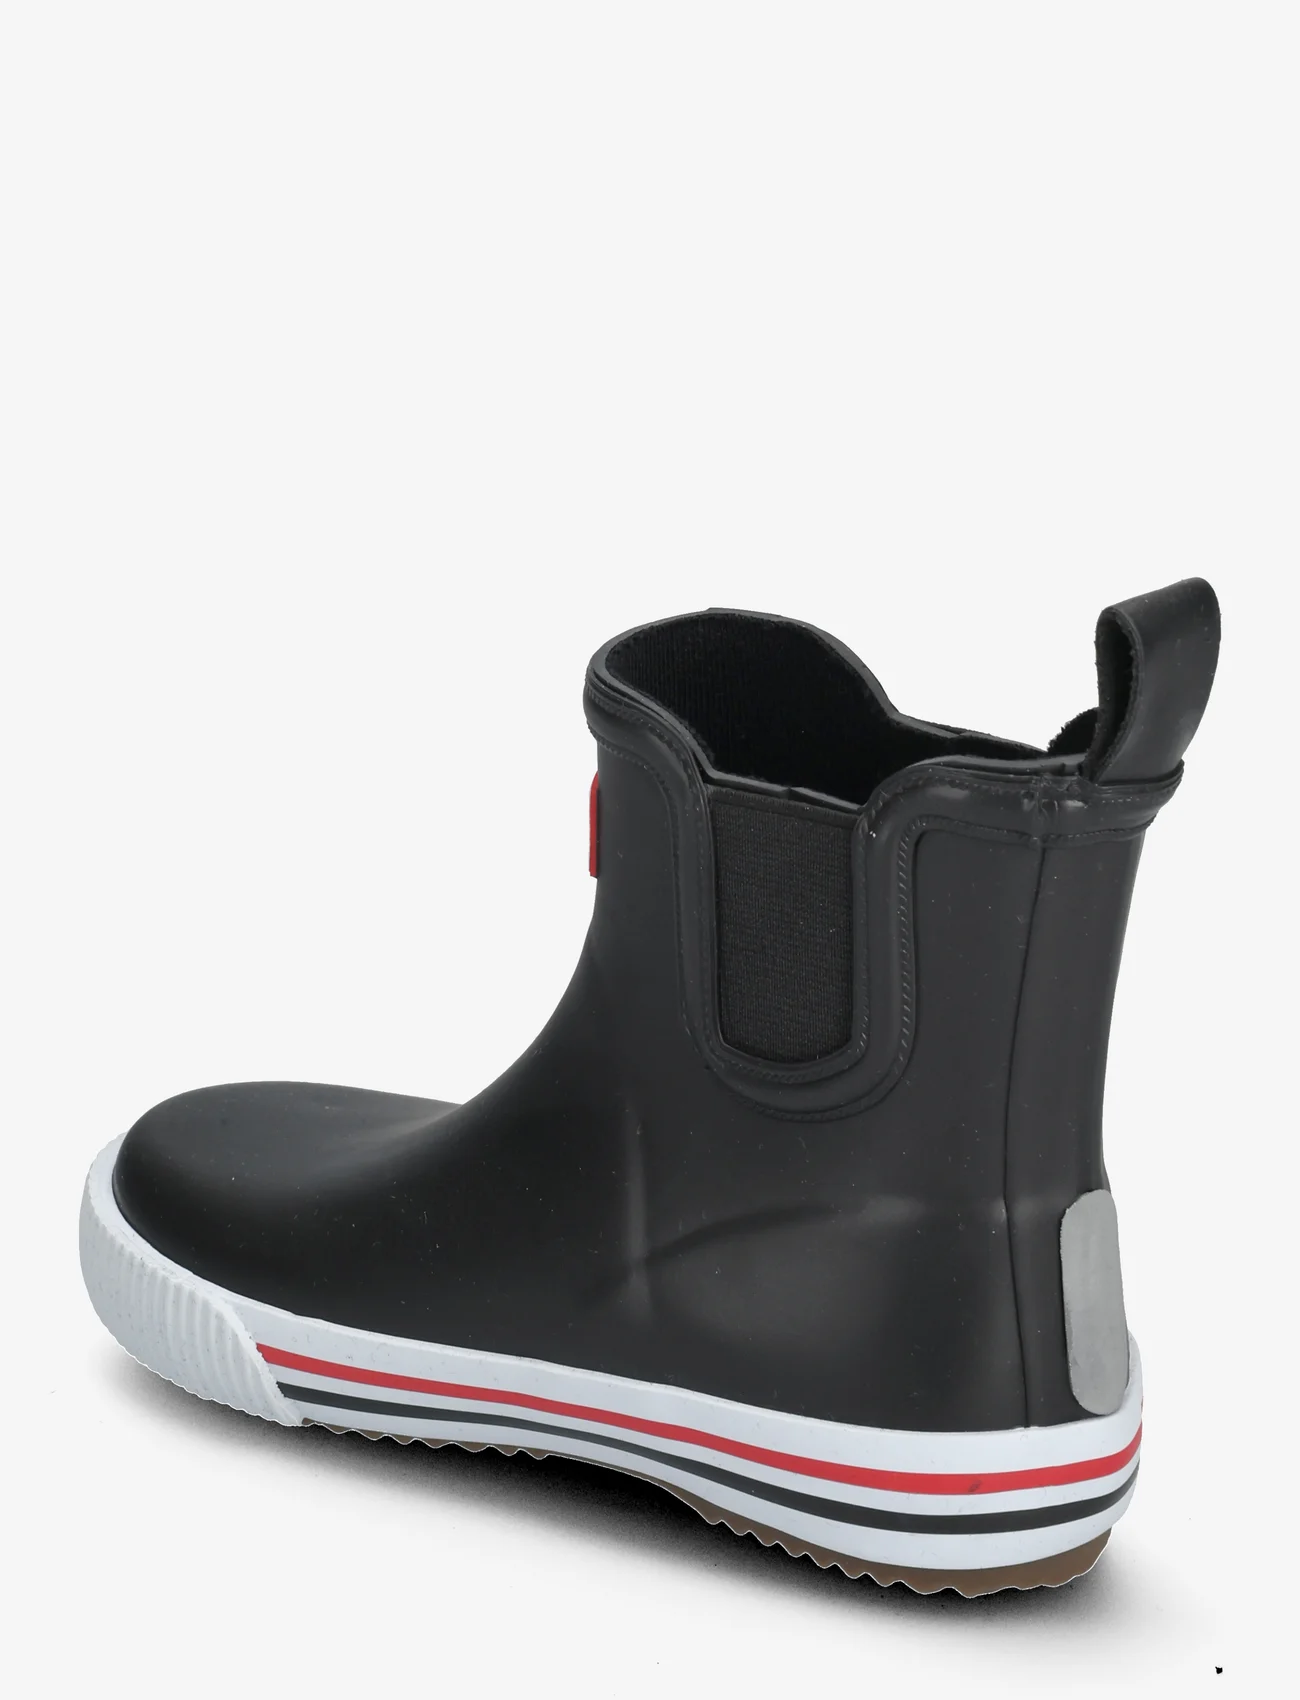 Reima - Rain boots, Ankles - gummistøvler uden for - black - 1